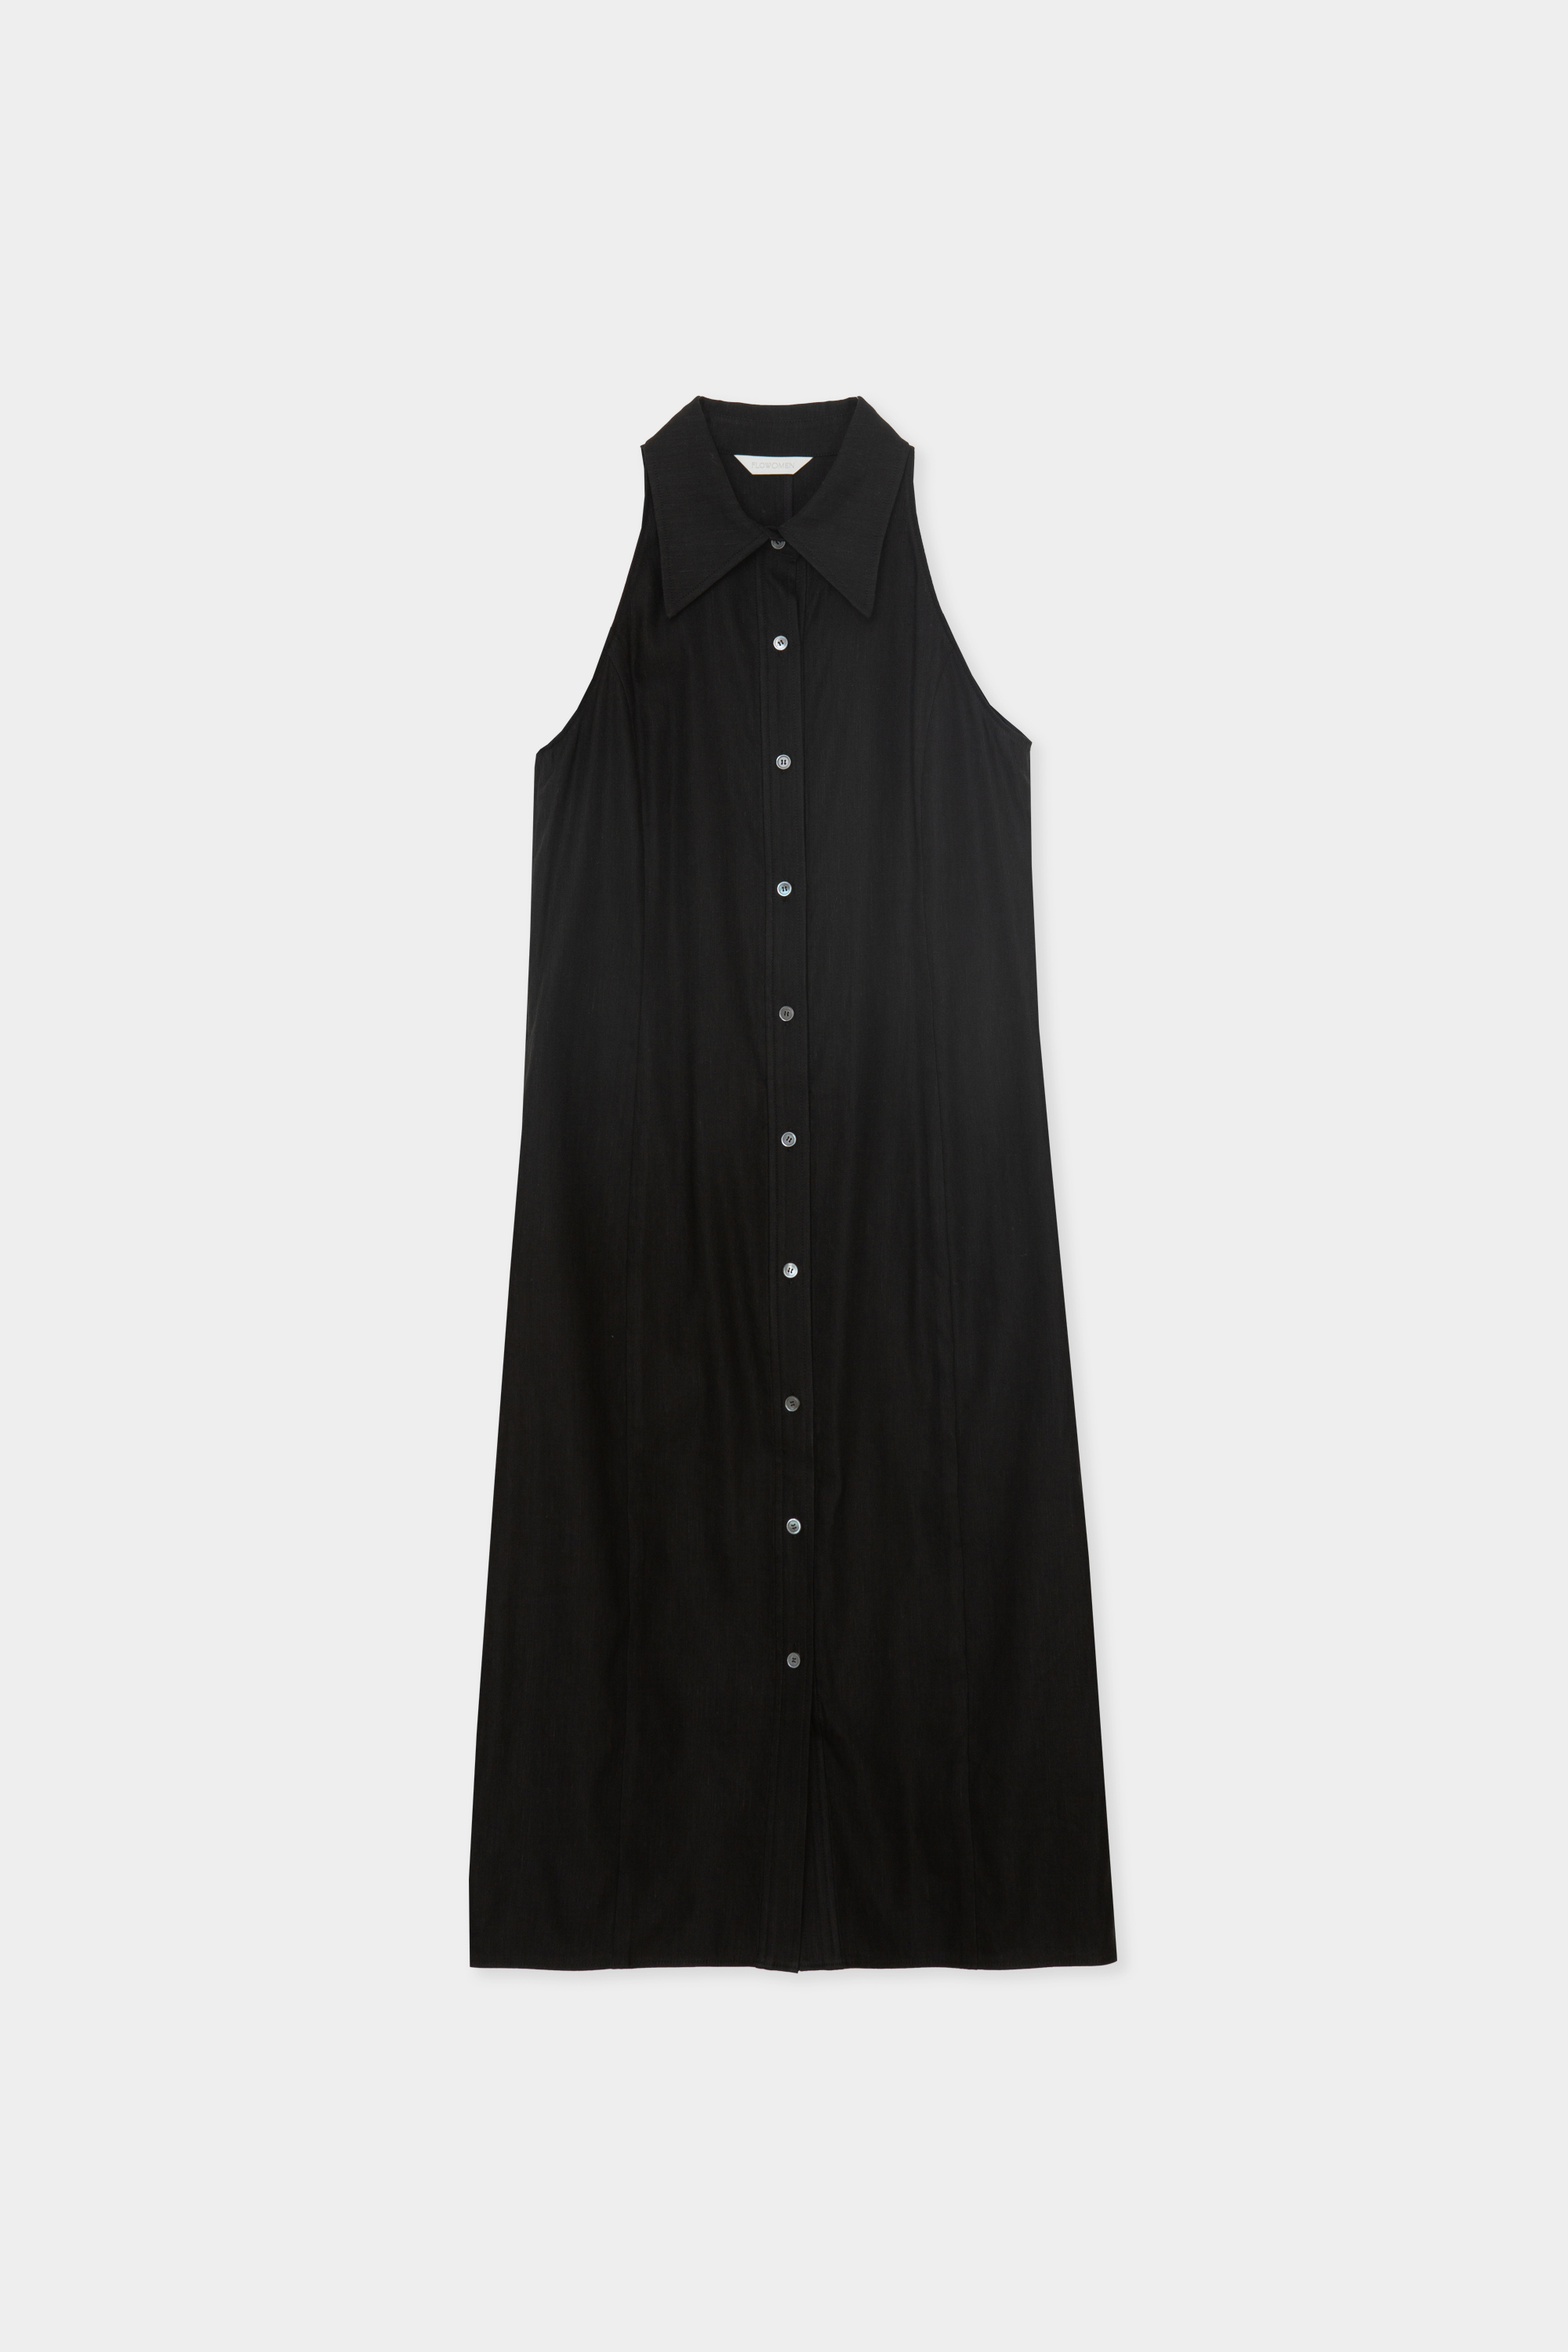 Halter Shirts Dress (Black)